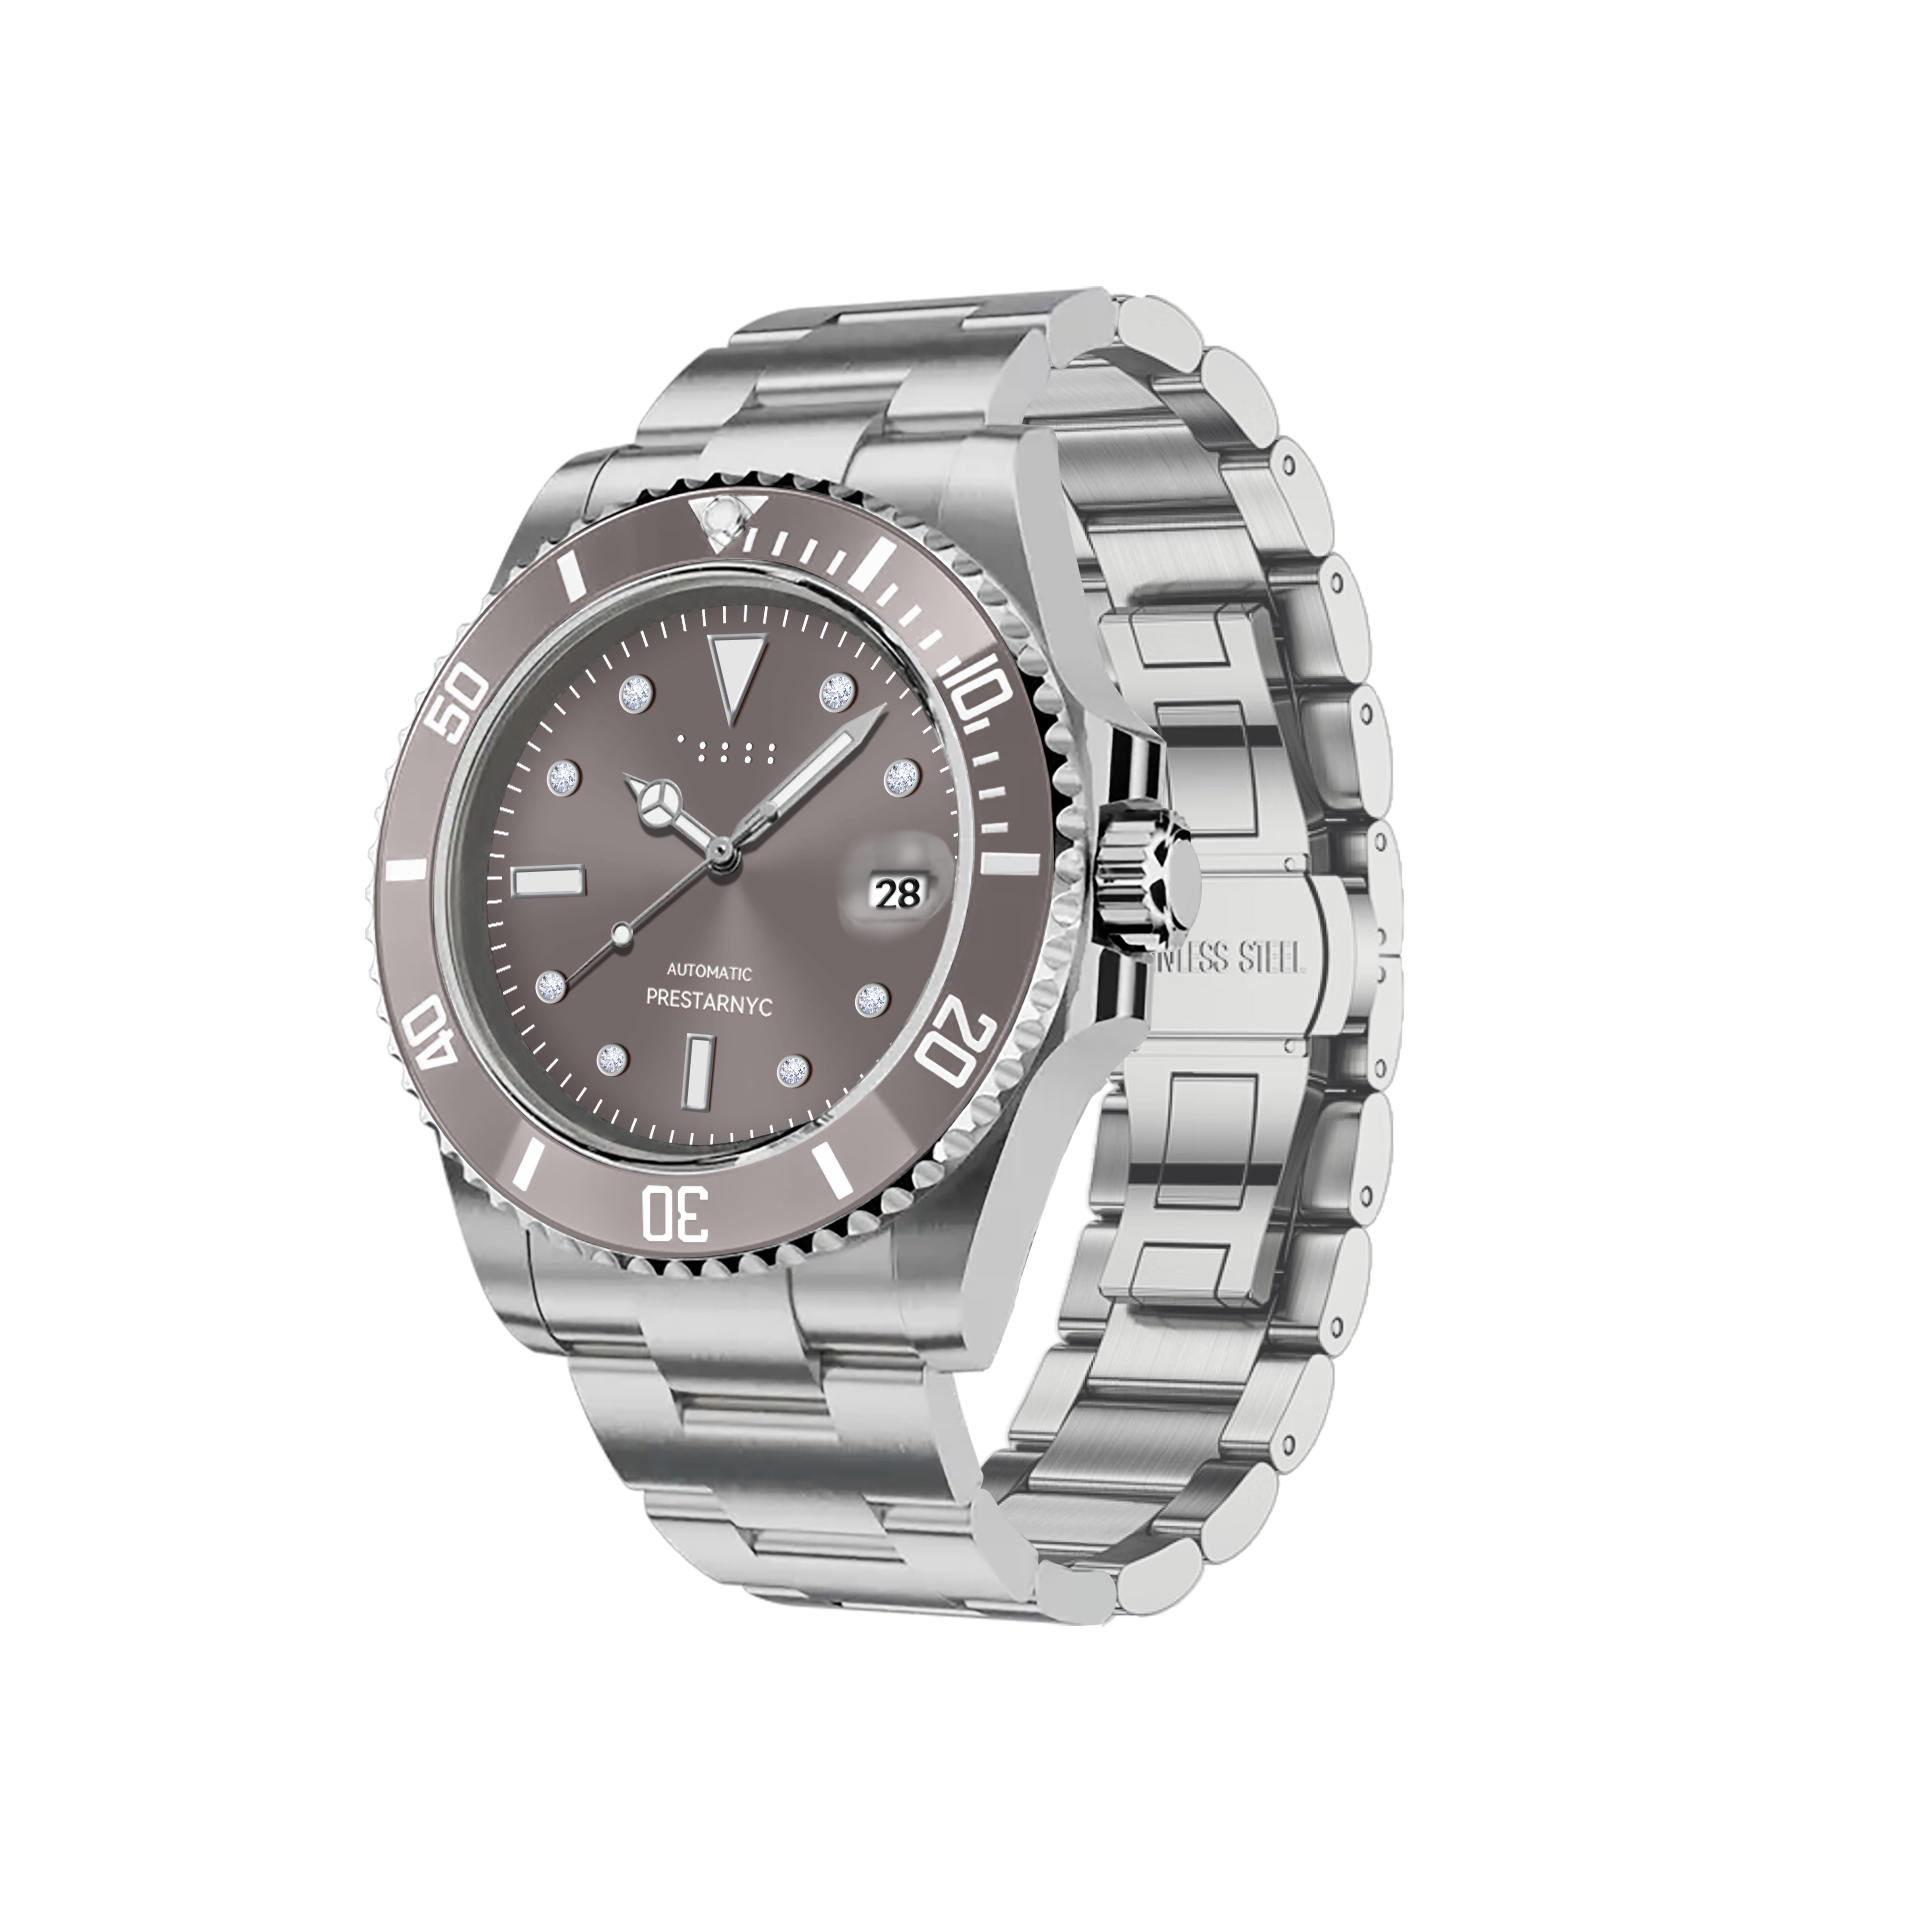 Prestar NYC Aquaman Classic Diamond Watch (Lilac Gray)